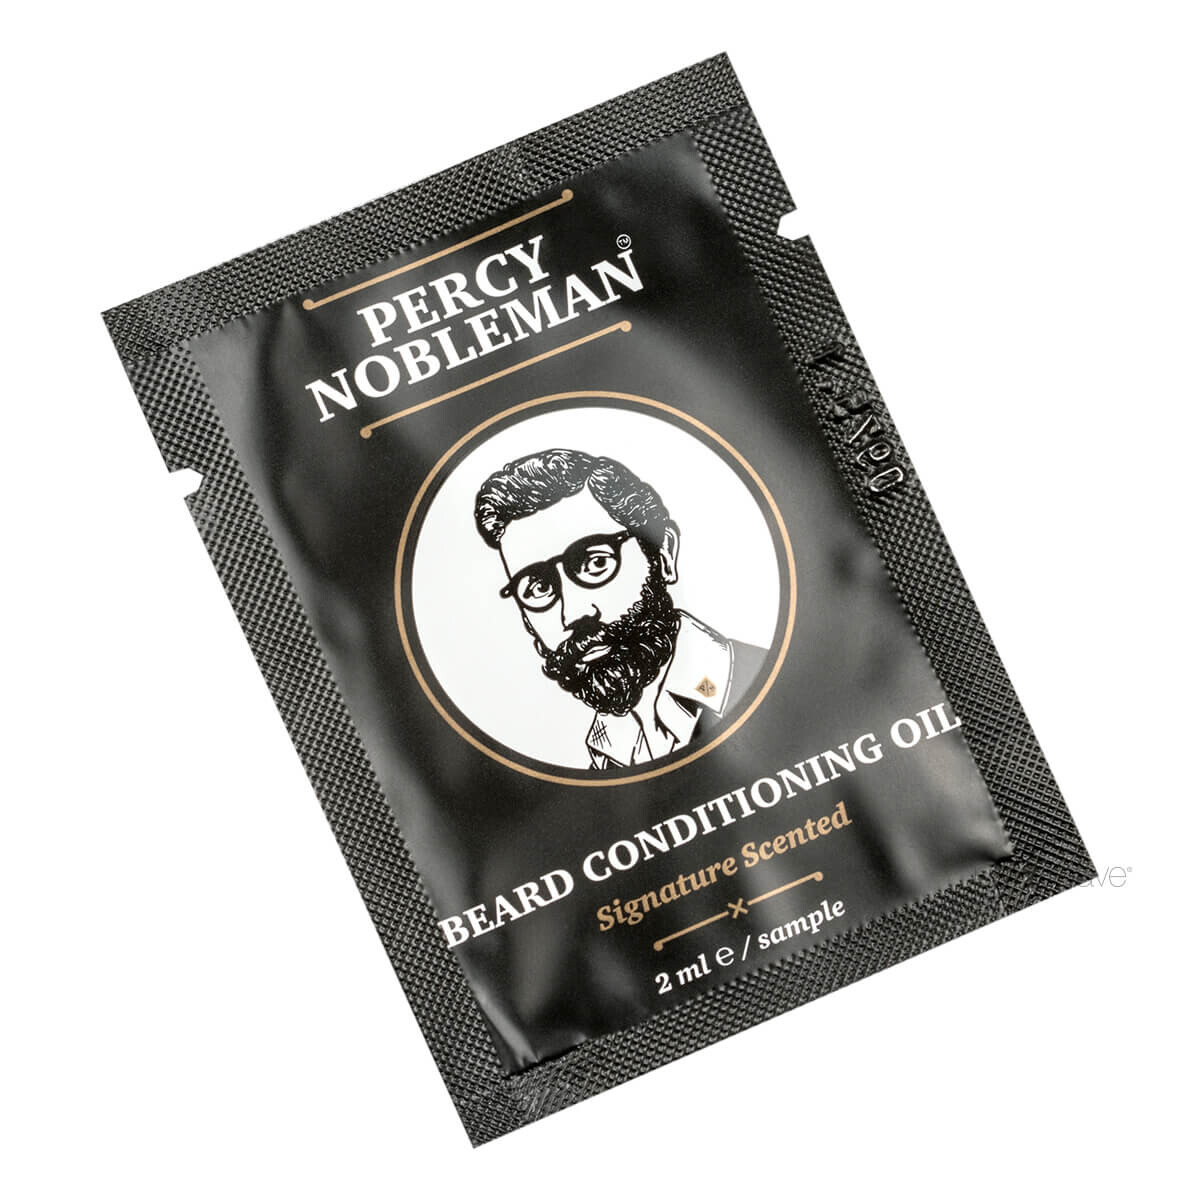 Se Percy Nobleman Beard Oil, Scented, SAMPLE, 2 ml. hos Proshave